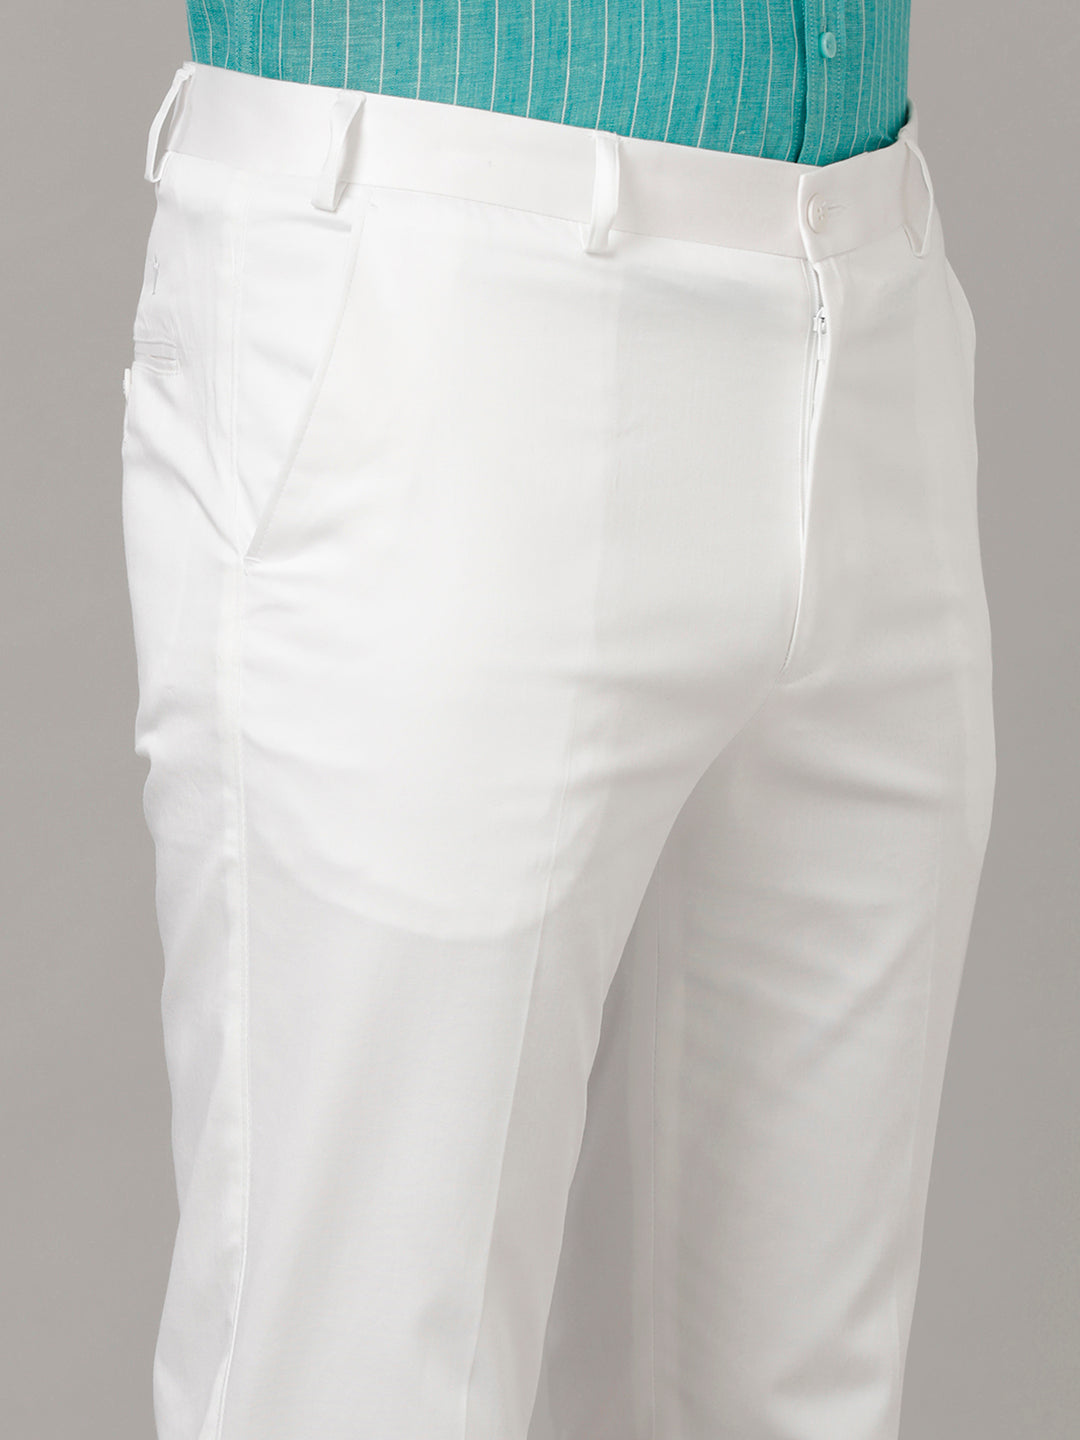 Mens Trim Fit Cotton White Pants Smart Stretch-Zoom view